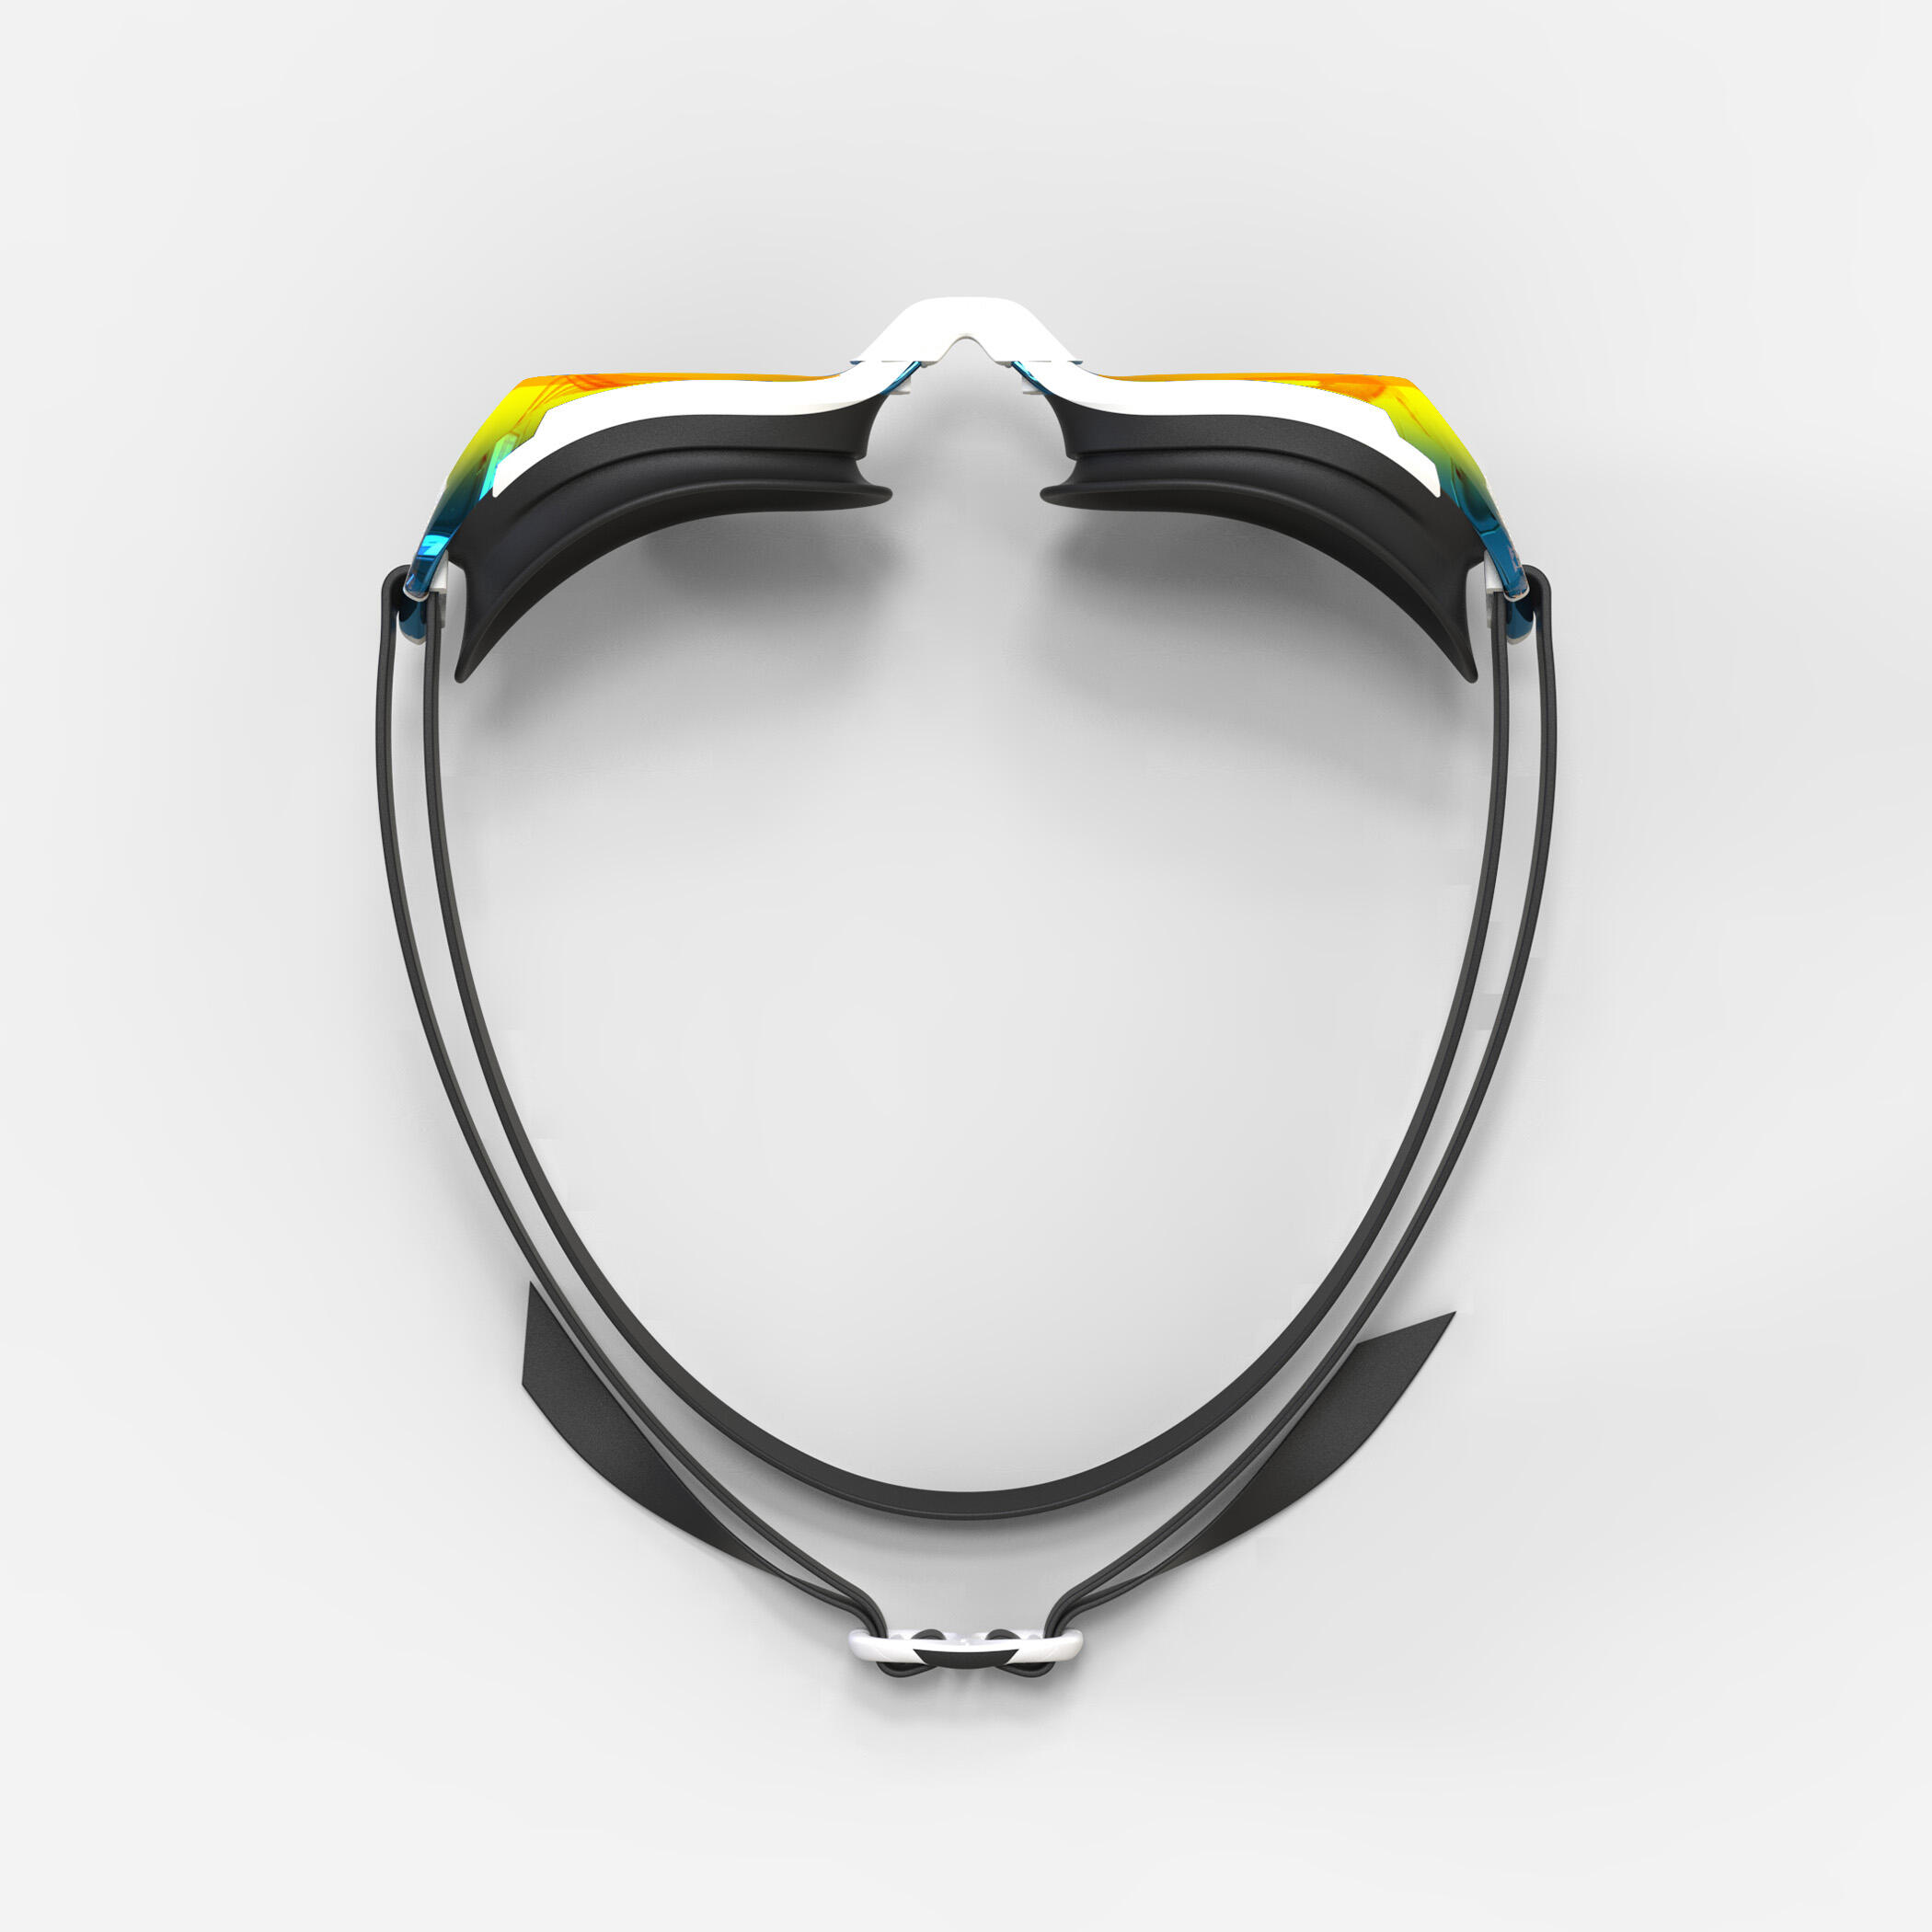 Swimming goggles BFIT - Mirrored lenses - One size - Black orange 4/5